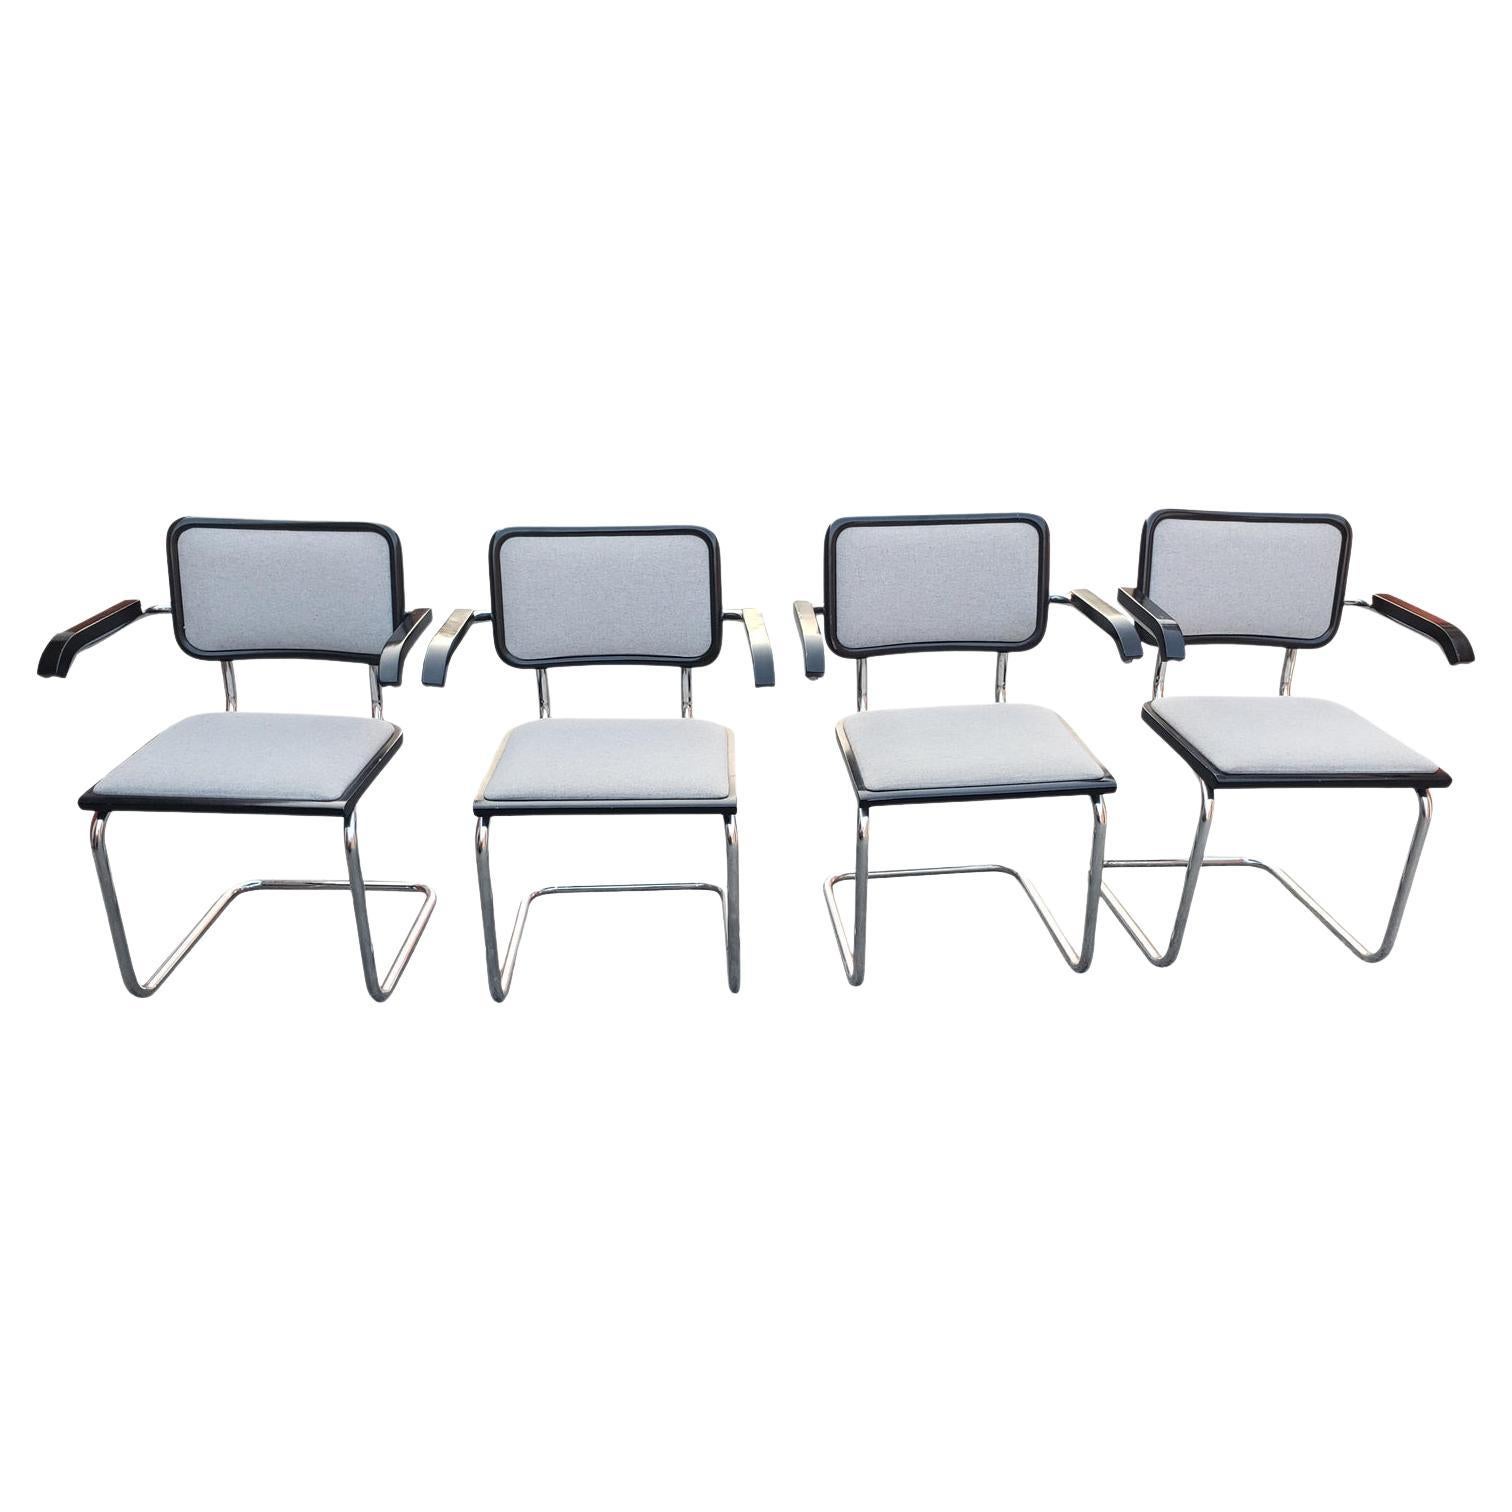 Gordon International Marcel Breuer B64 Cantilever Upholstered Chairs, Set of 4